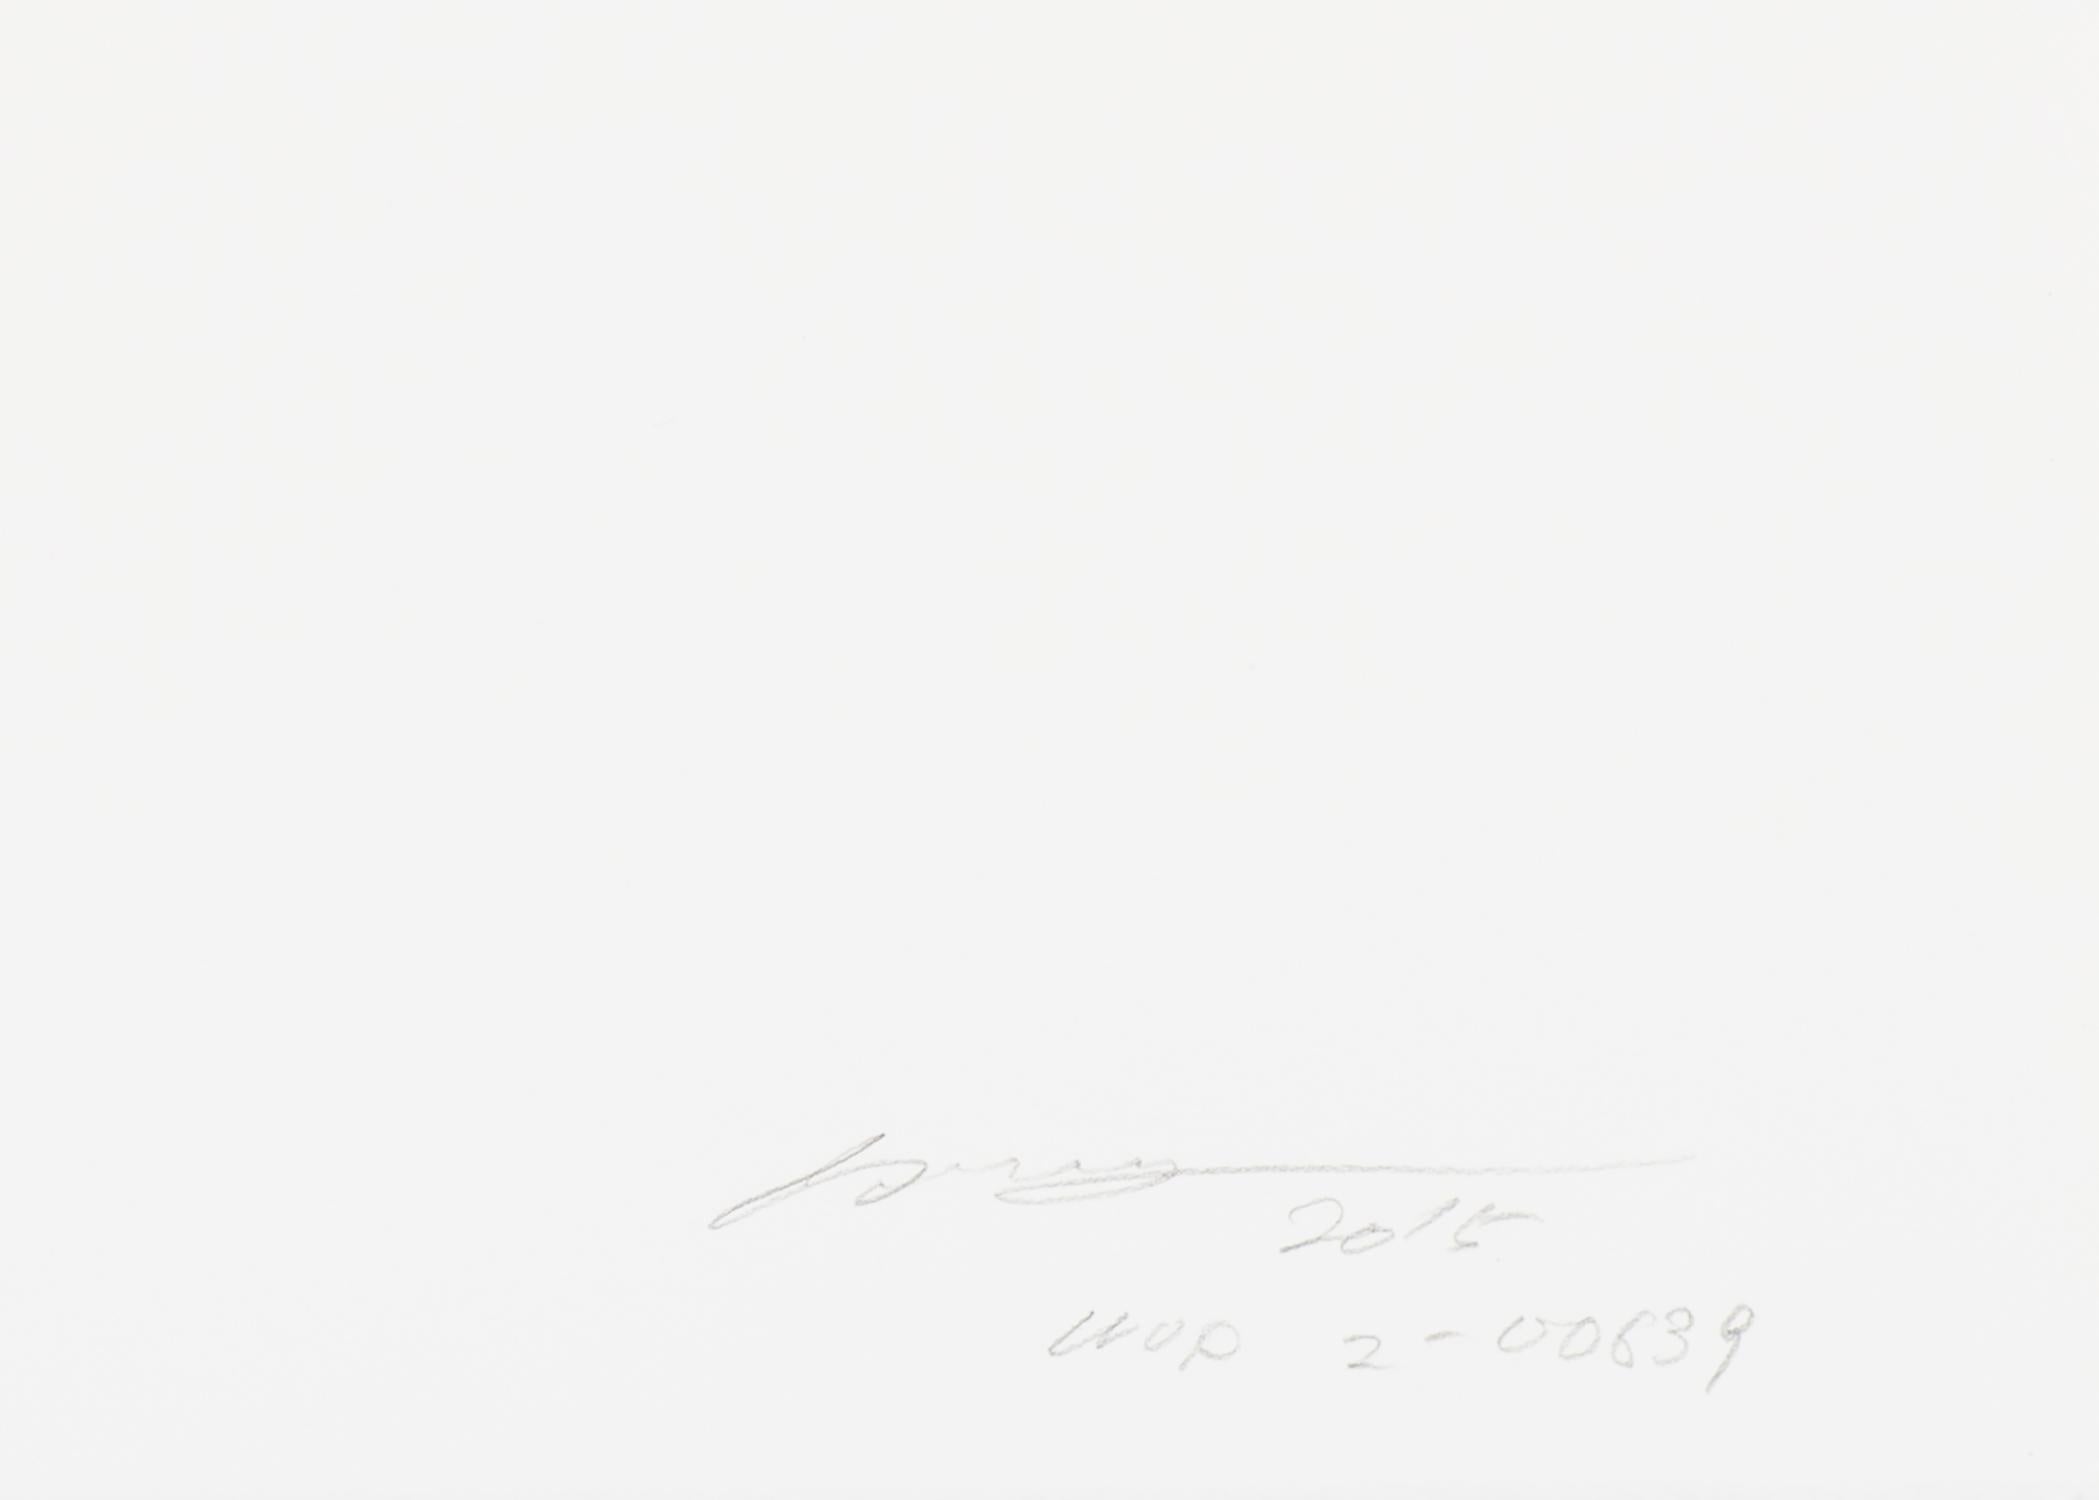 WOP 2 - 00639 - Gray Abstract Painting by Hiro Yokose